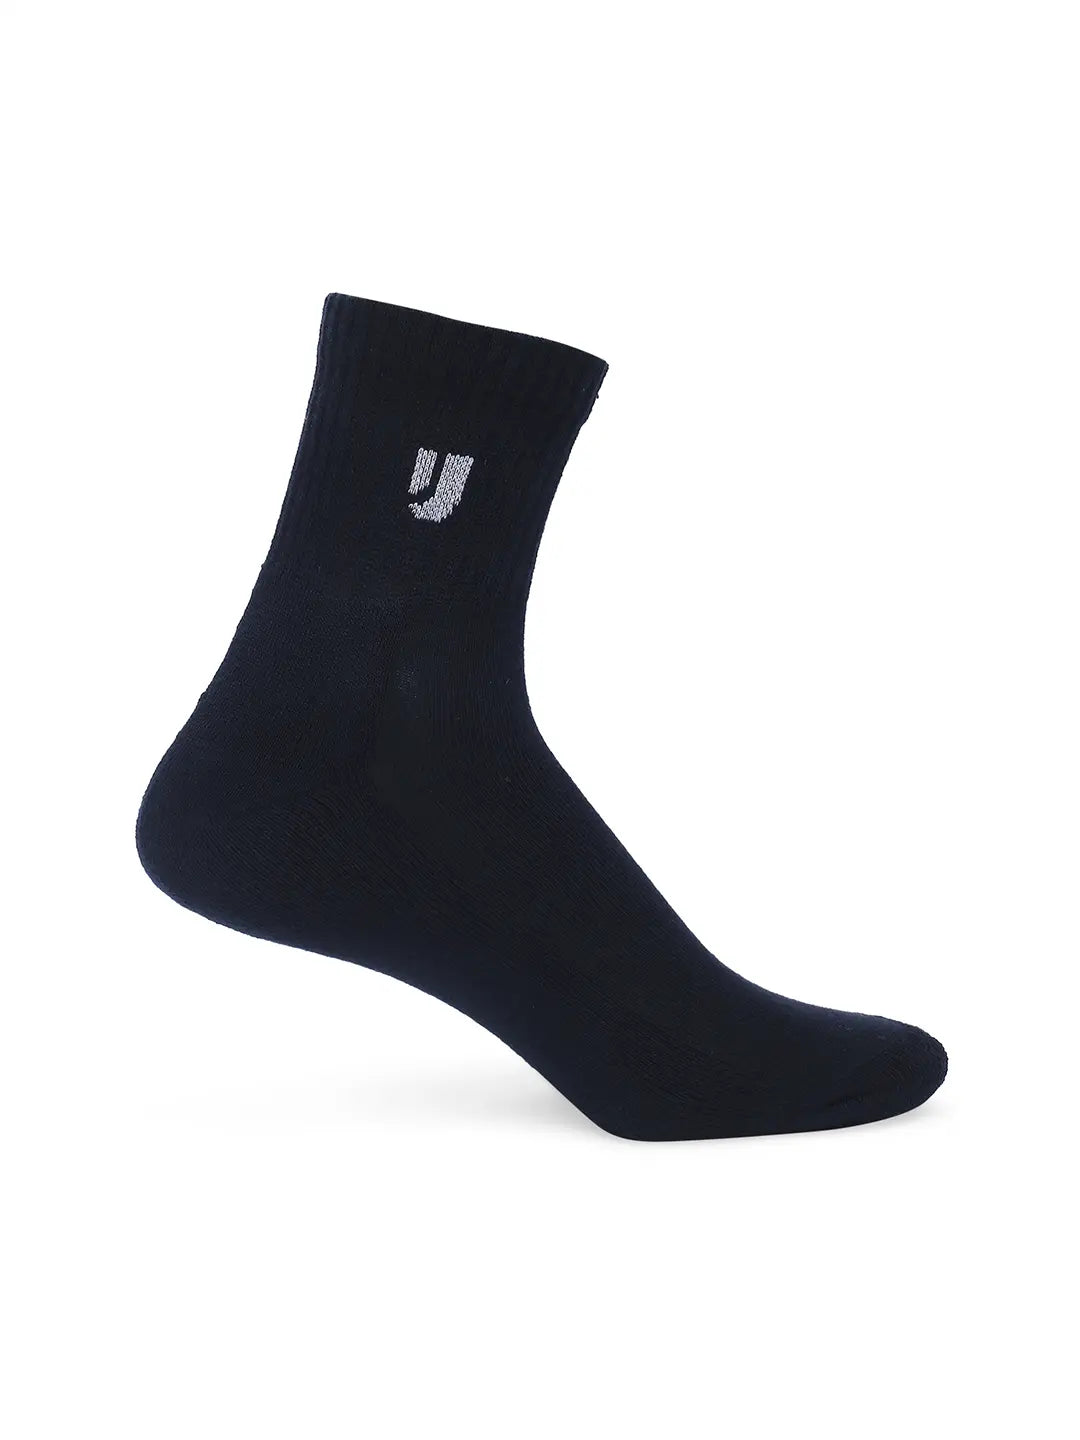 Men Dark Blue & Grey Cotton Blend Ankle Length Socks - Pack Of 2 - Underjeans by Spykar